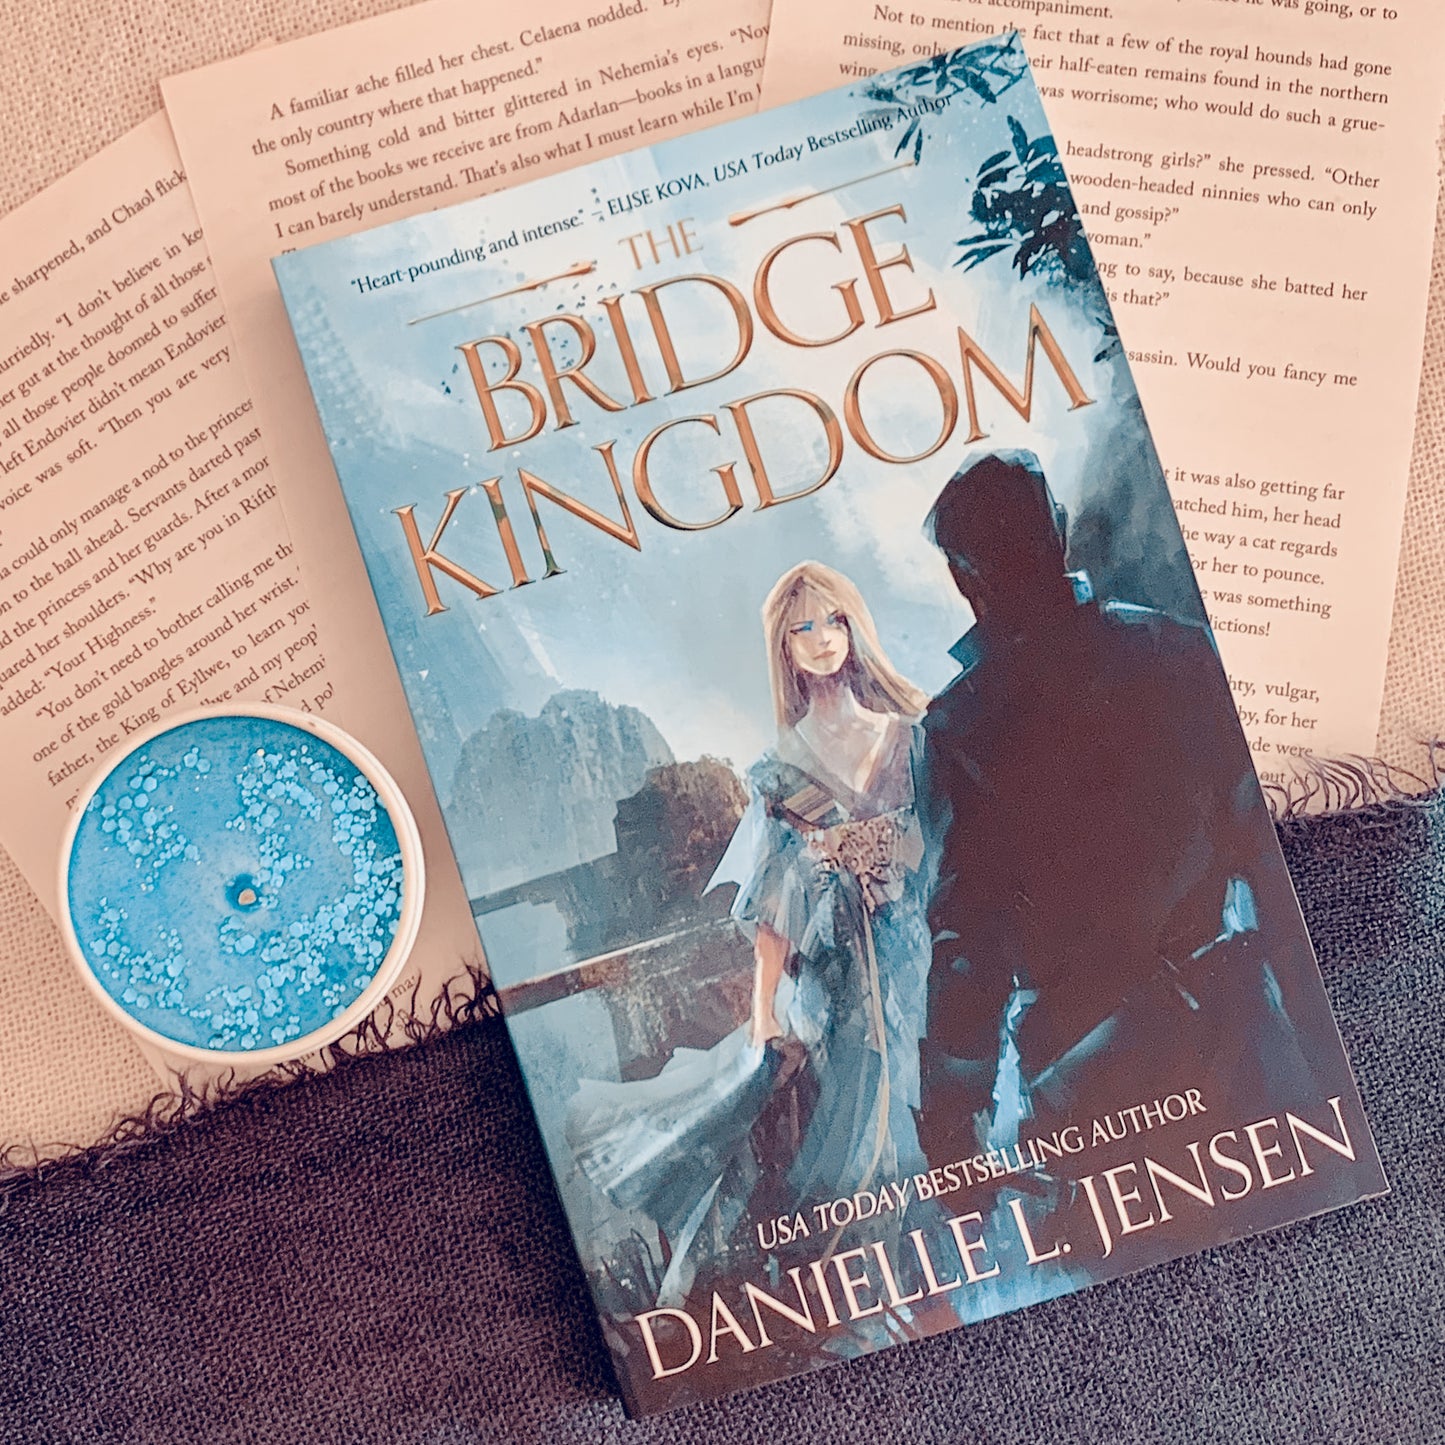 The Bridge Kingdom series by Danielle L. Jensen